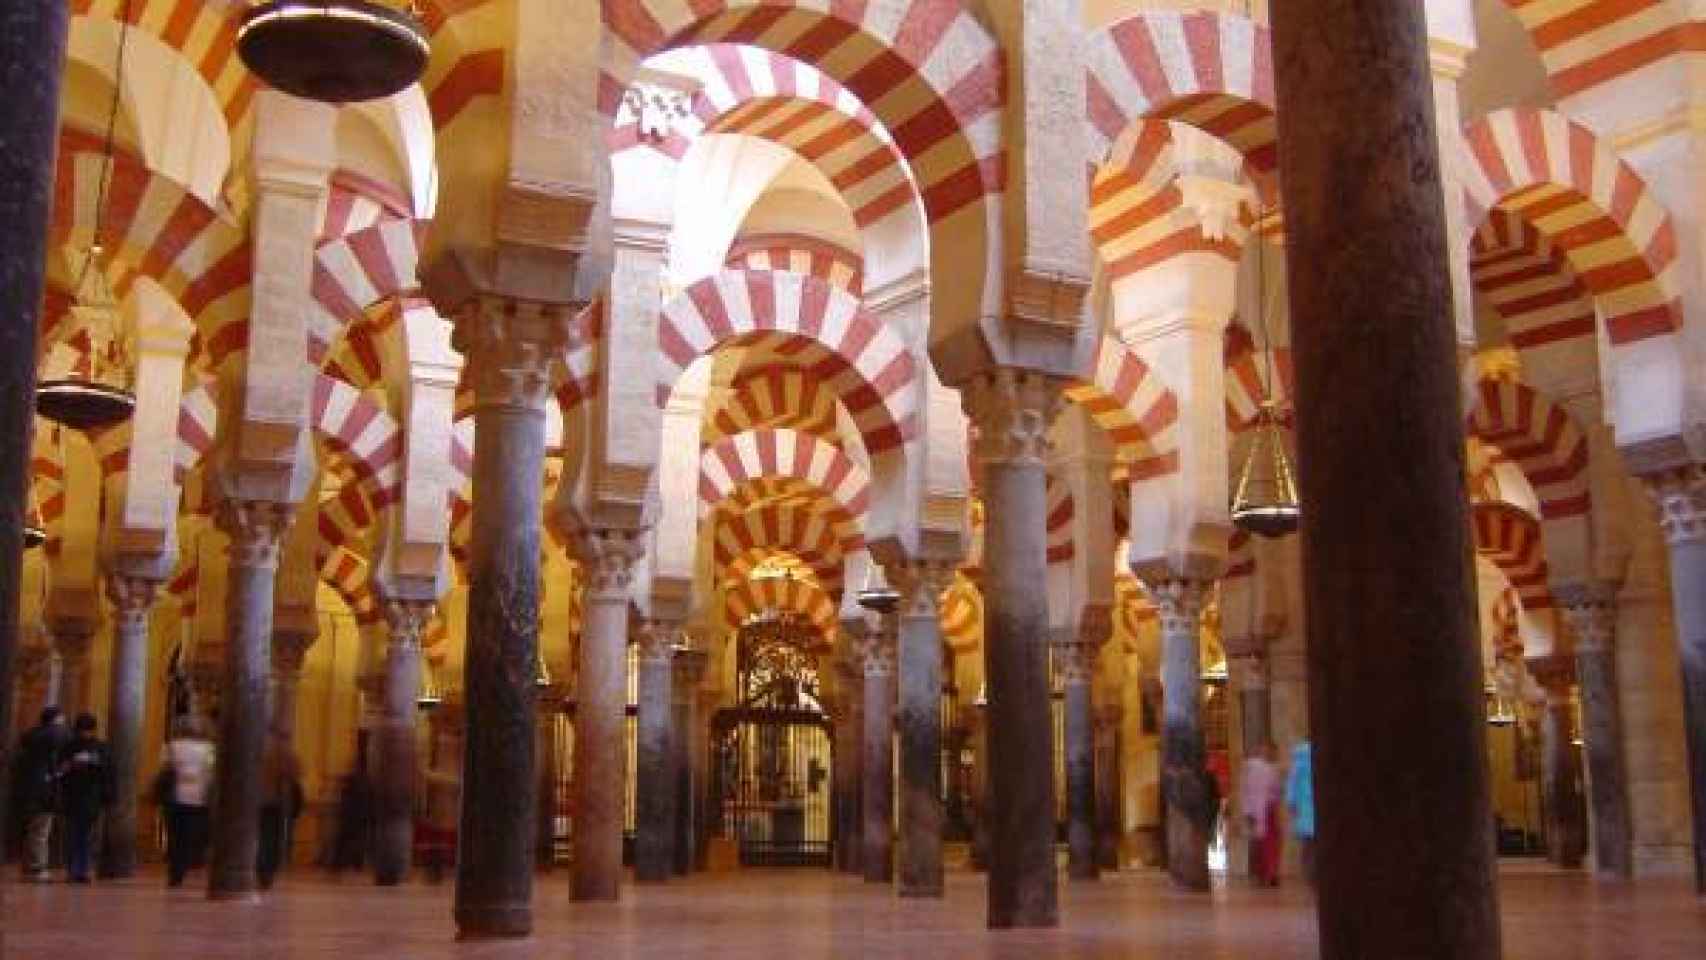 Patio de las columnas de la Mezquita de Córdoba.